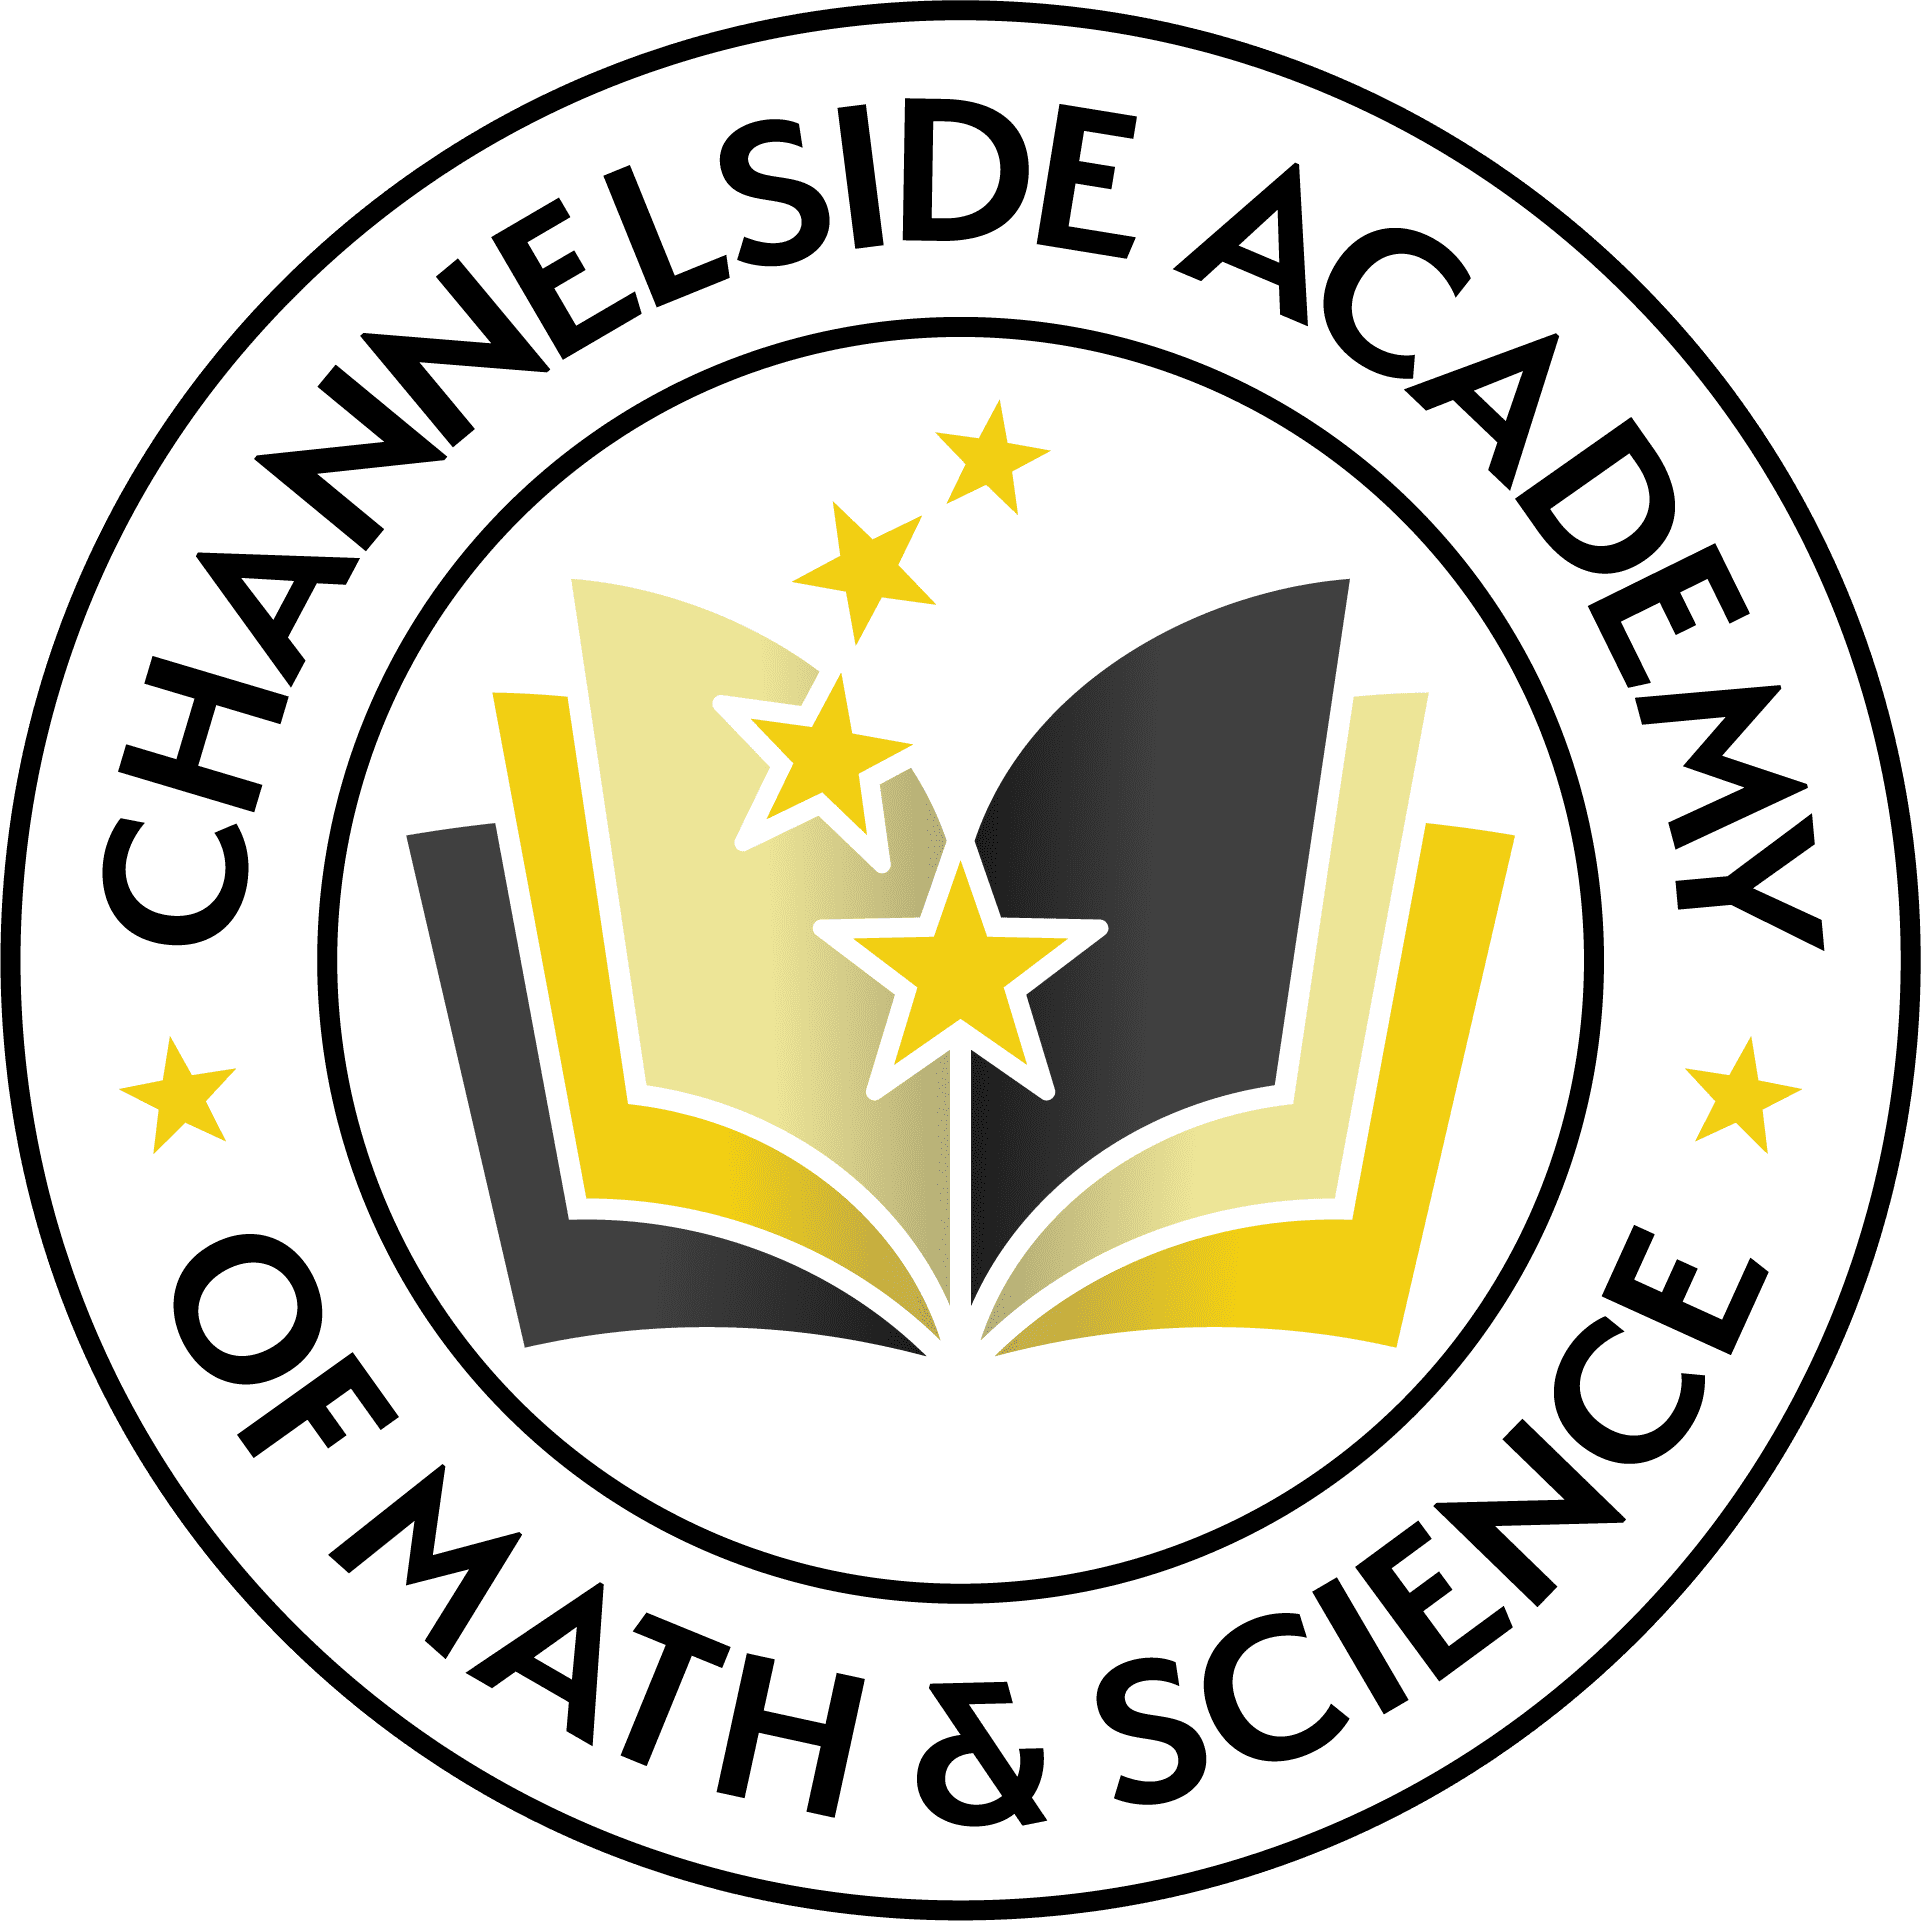 Channelside Academy